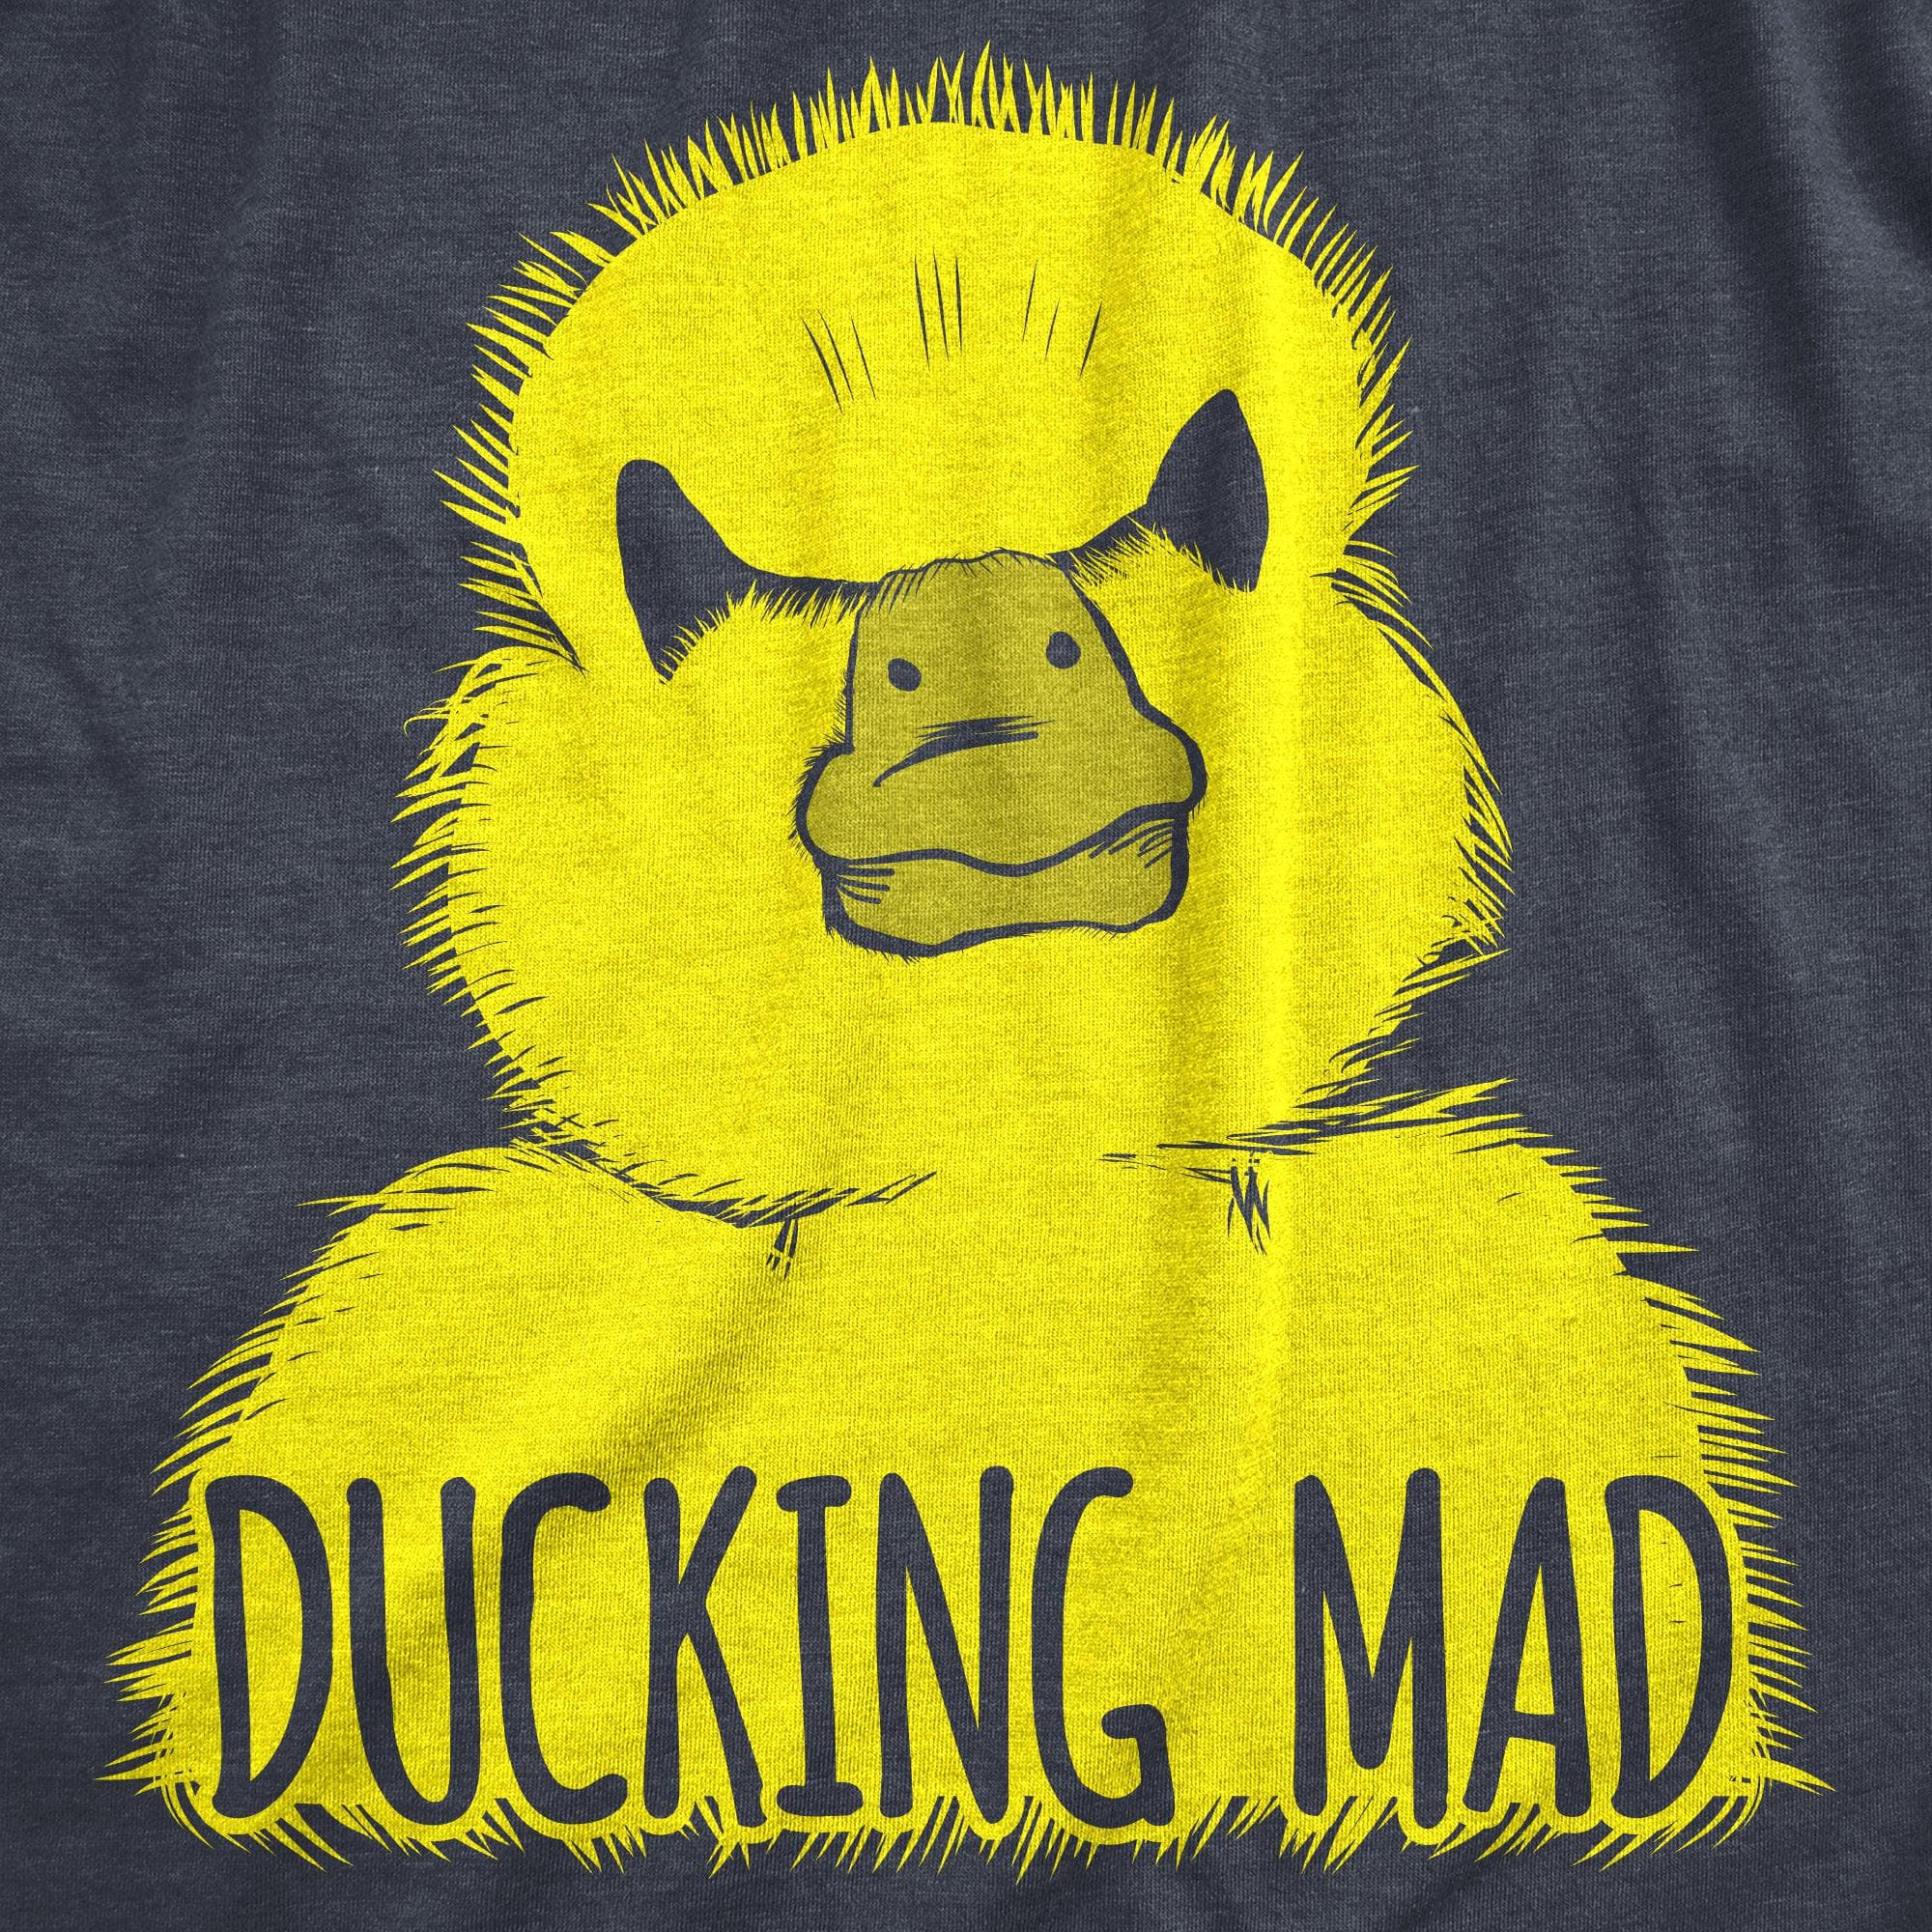 Ducking Mad Women's Tshirt  -  Crazy Dog T-Shirts